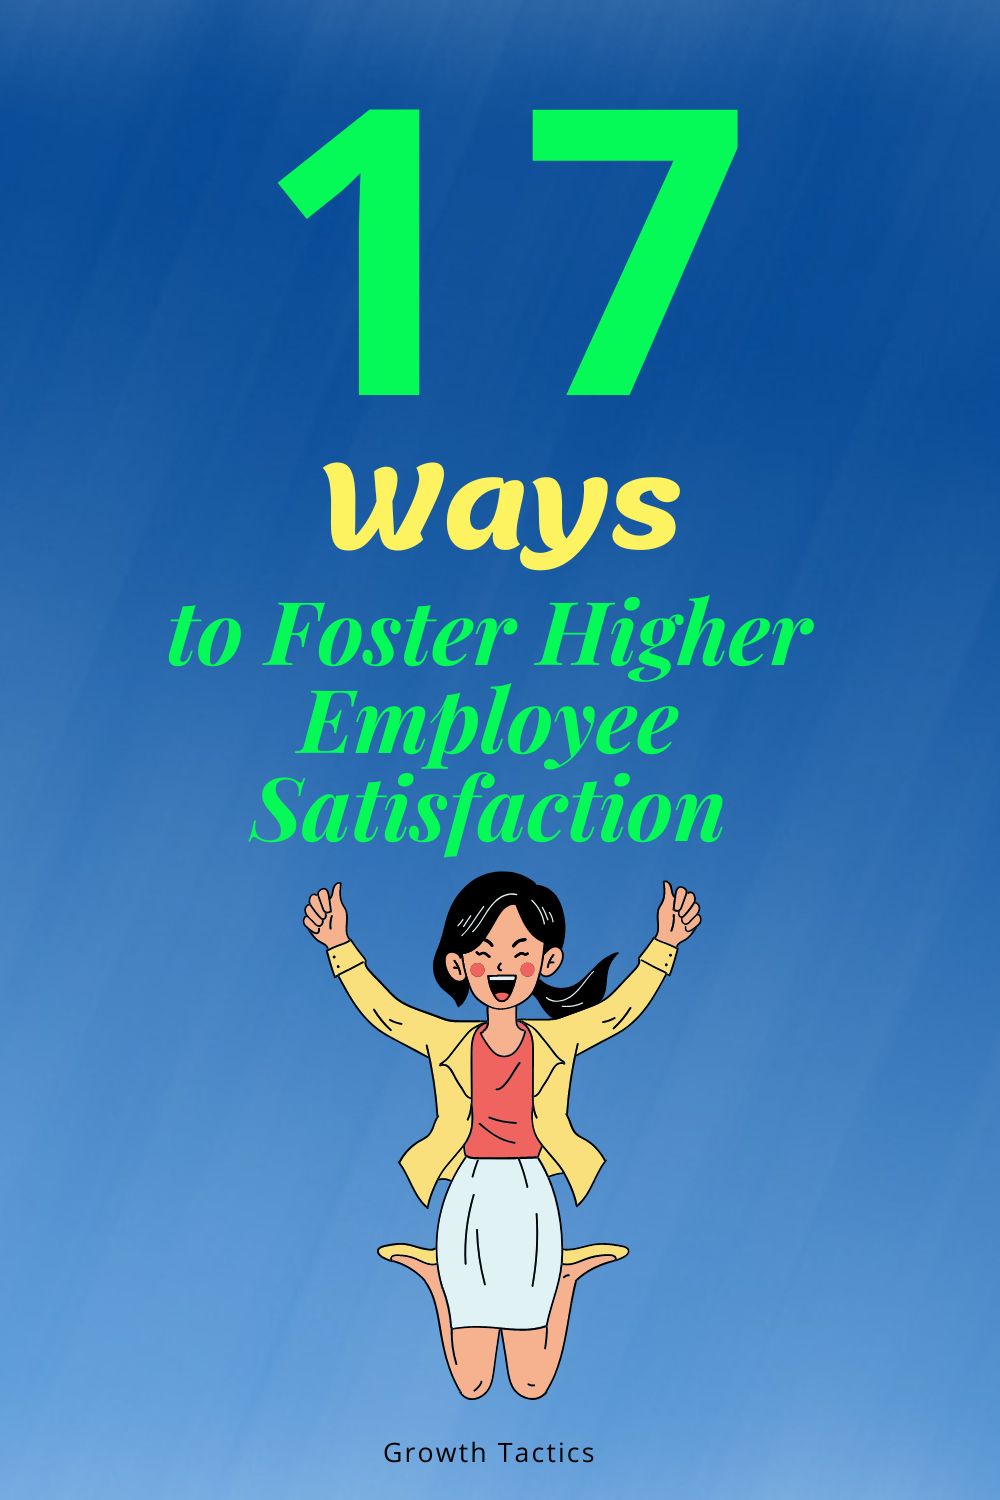 17 Ways to Foster Higher Employee Satisfaction